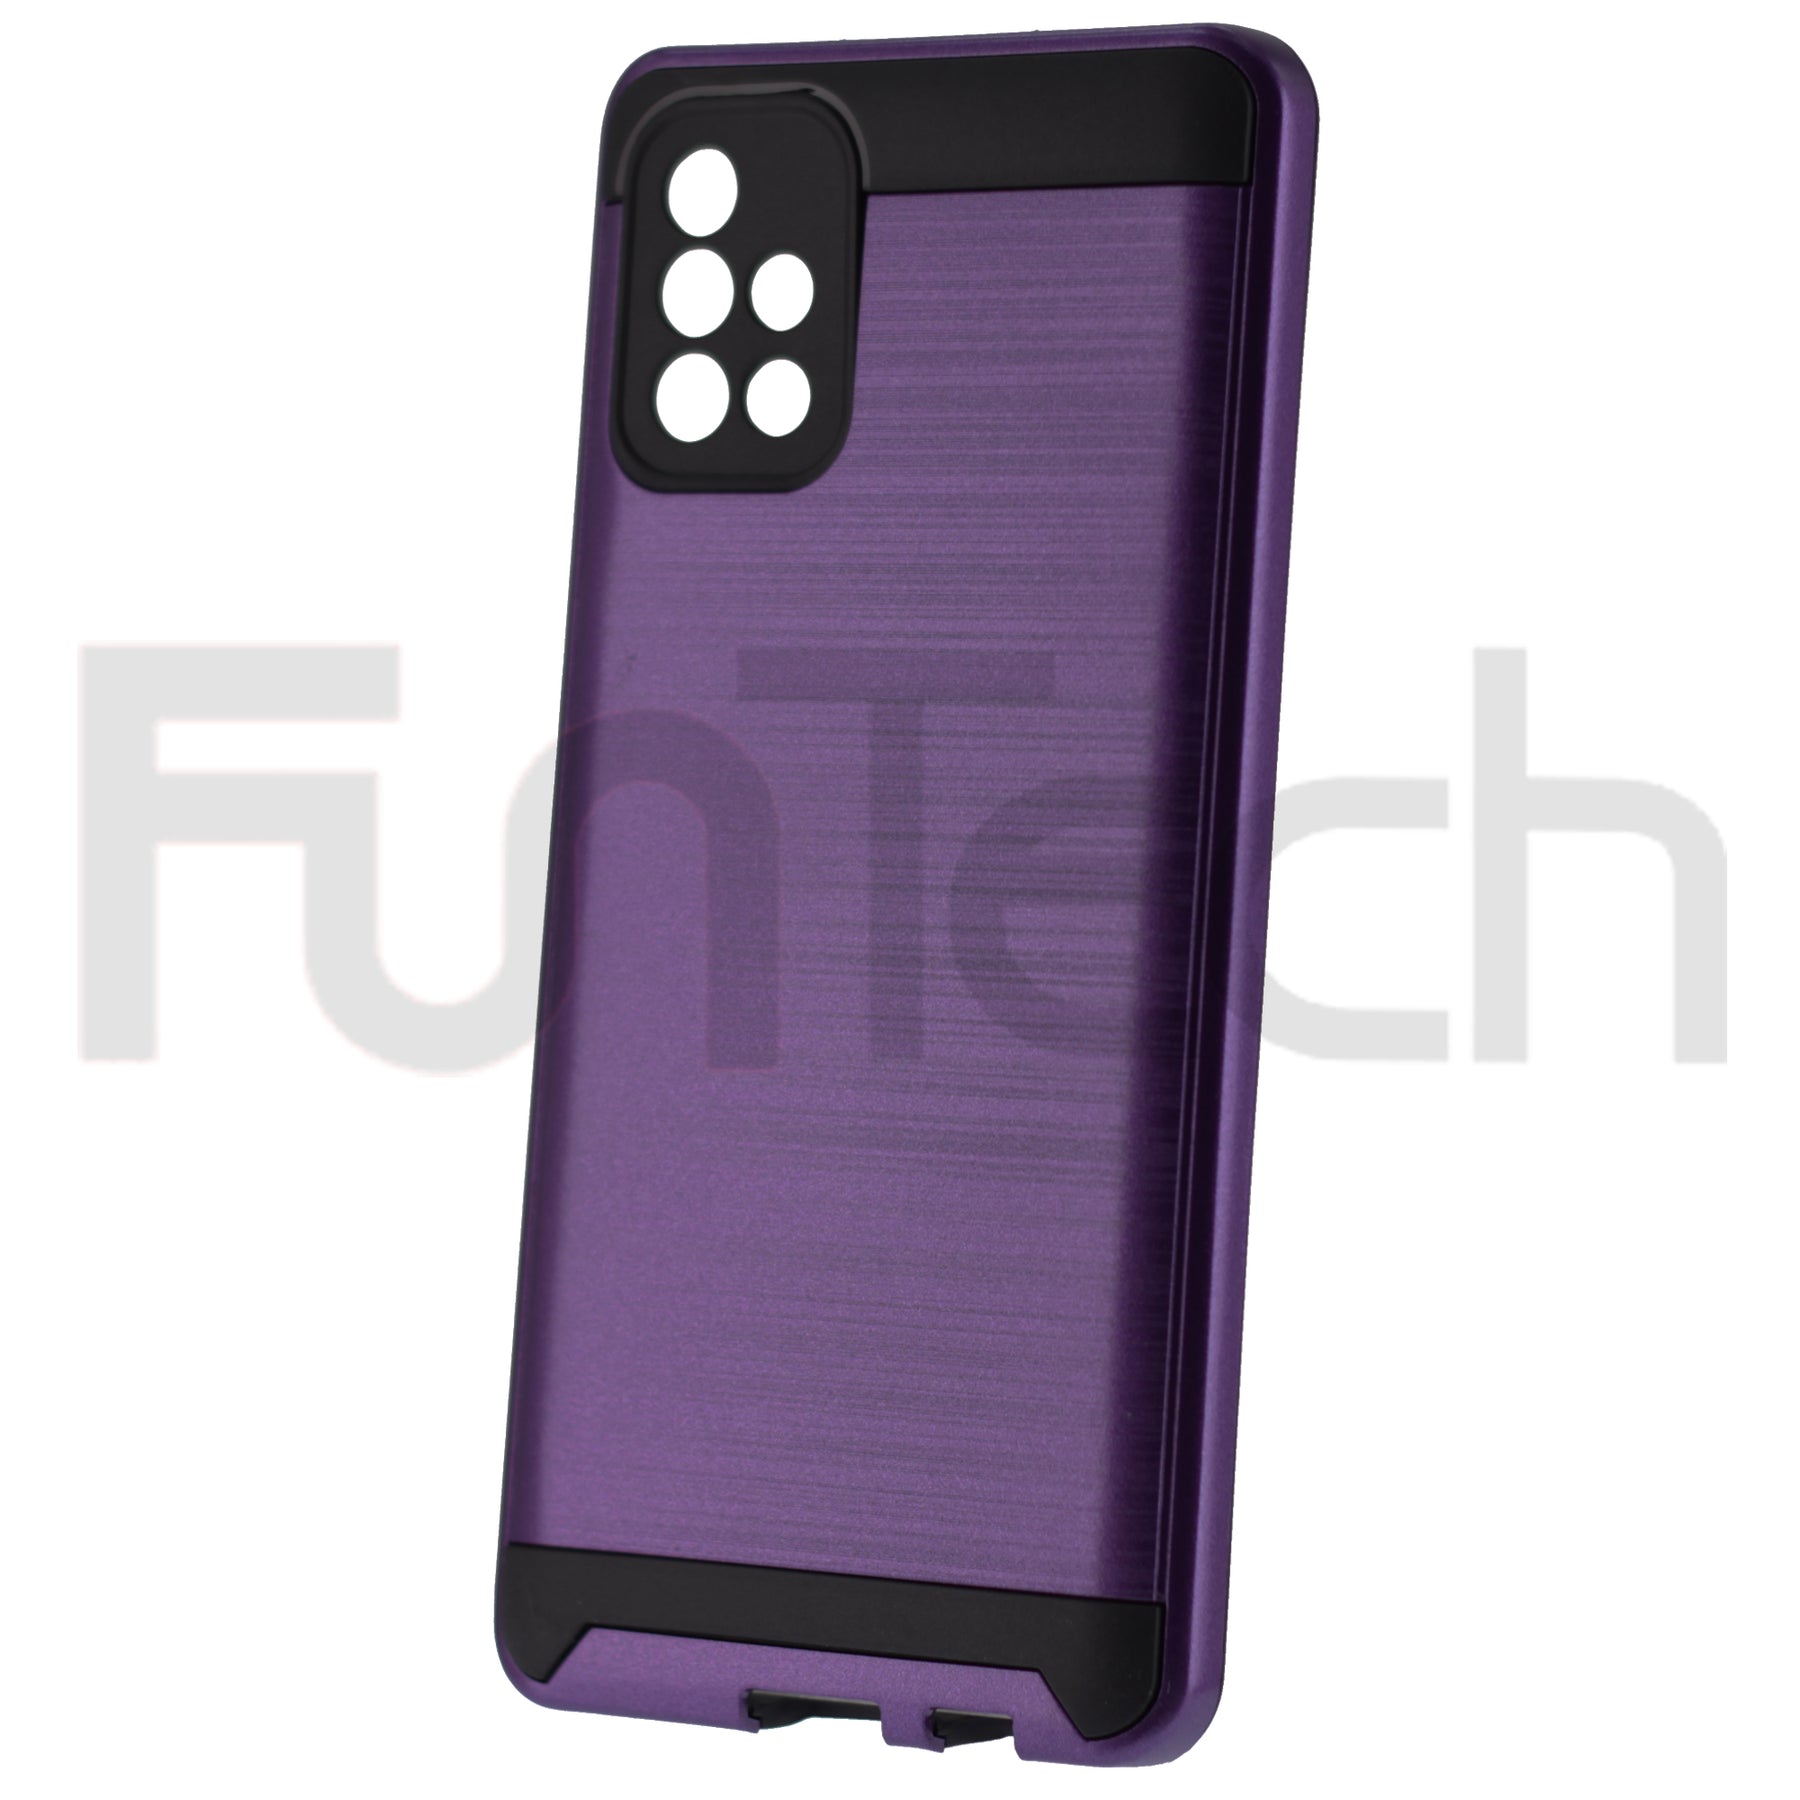 Samsung A71, Slim Armor Case, Color Purple.